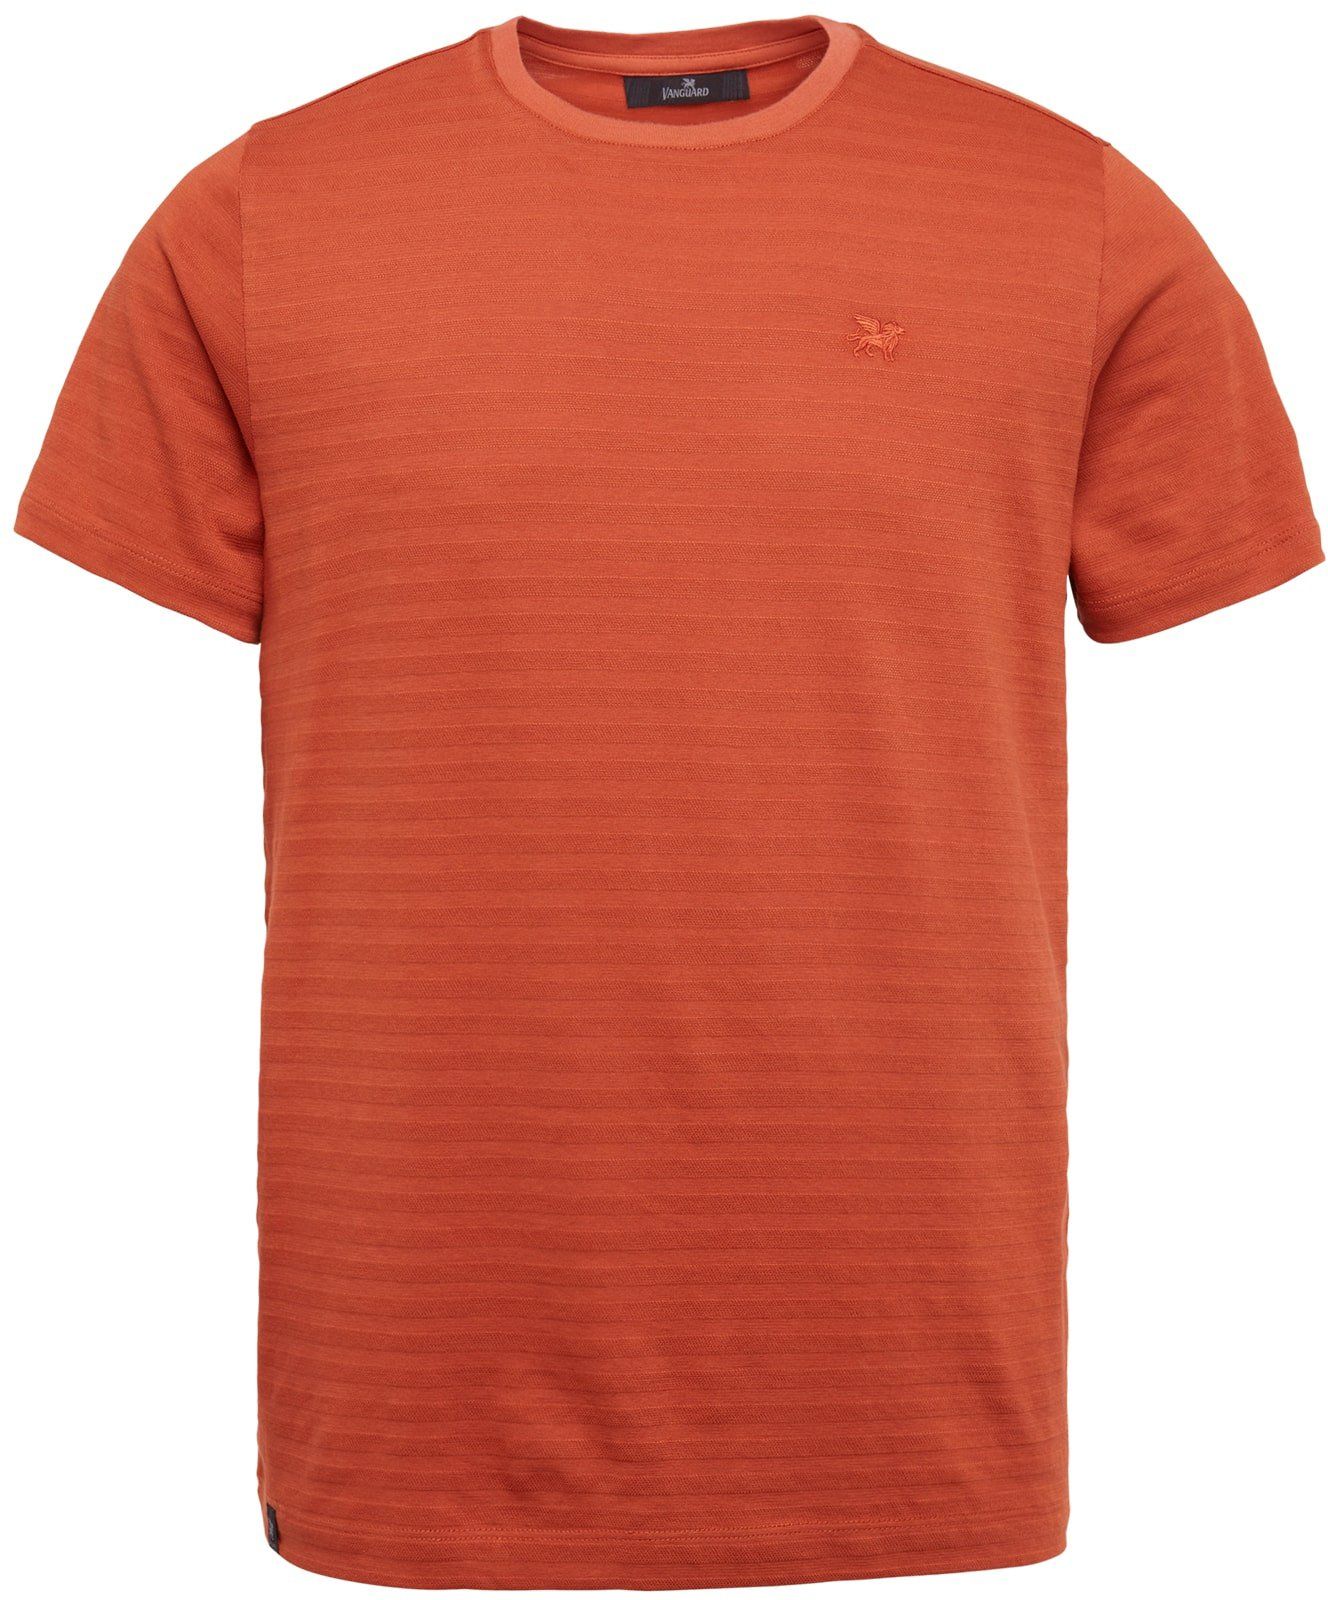 Vanguard Jersey T-Shirt Orange Red size 3XL